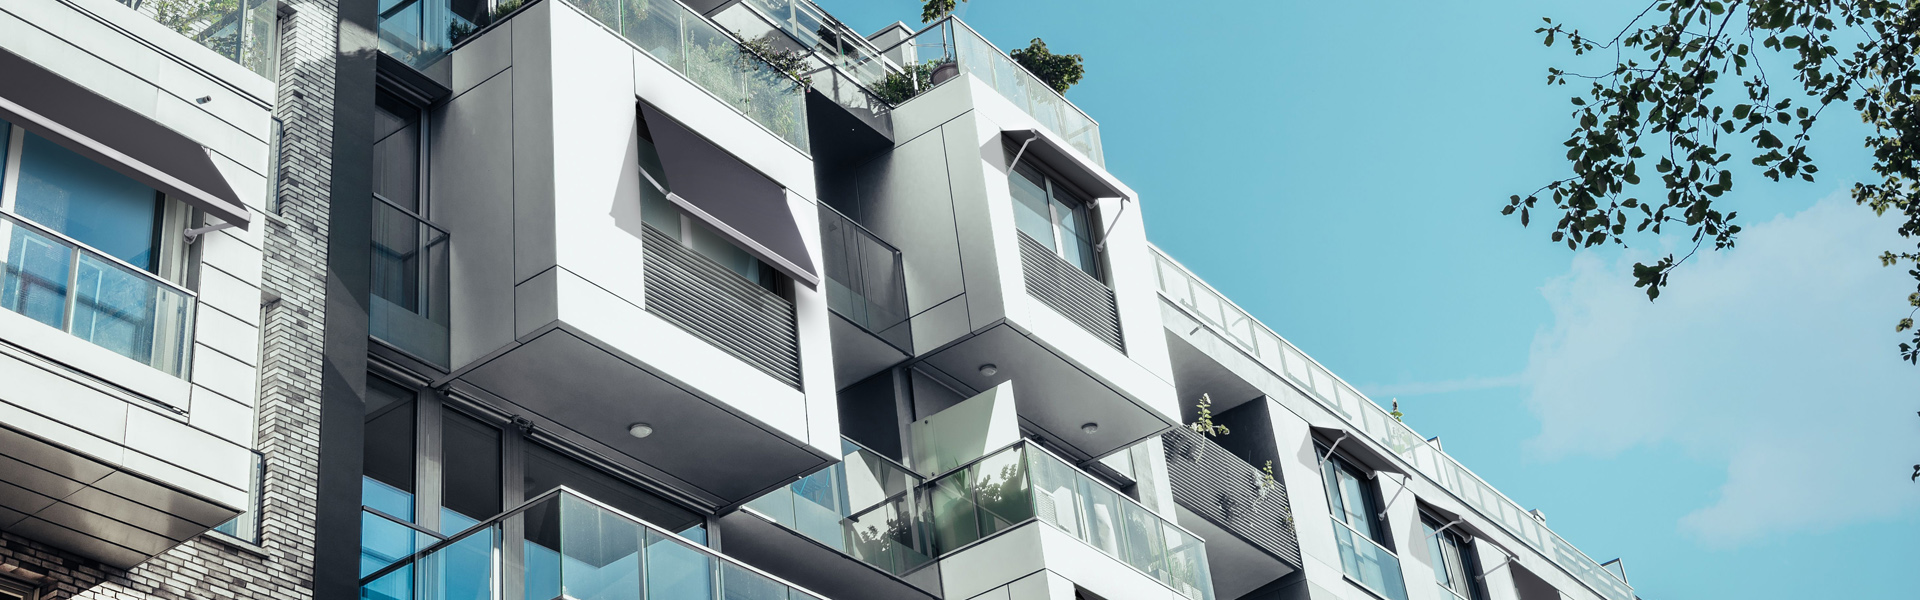 modern residential architecture in berlin; Shutterstock ID 315222680; PO: 0000